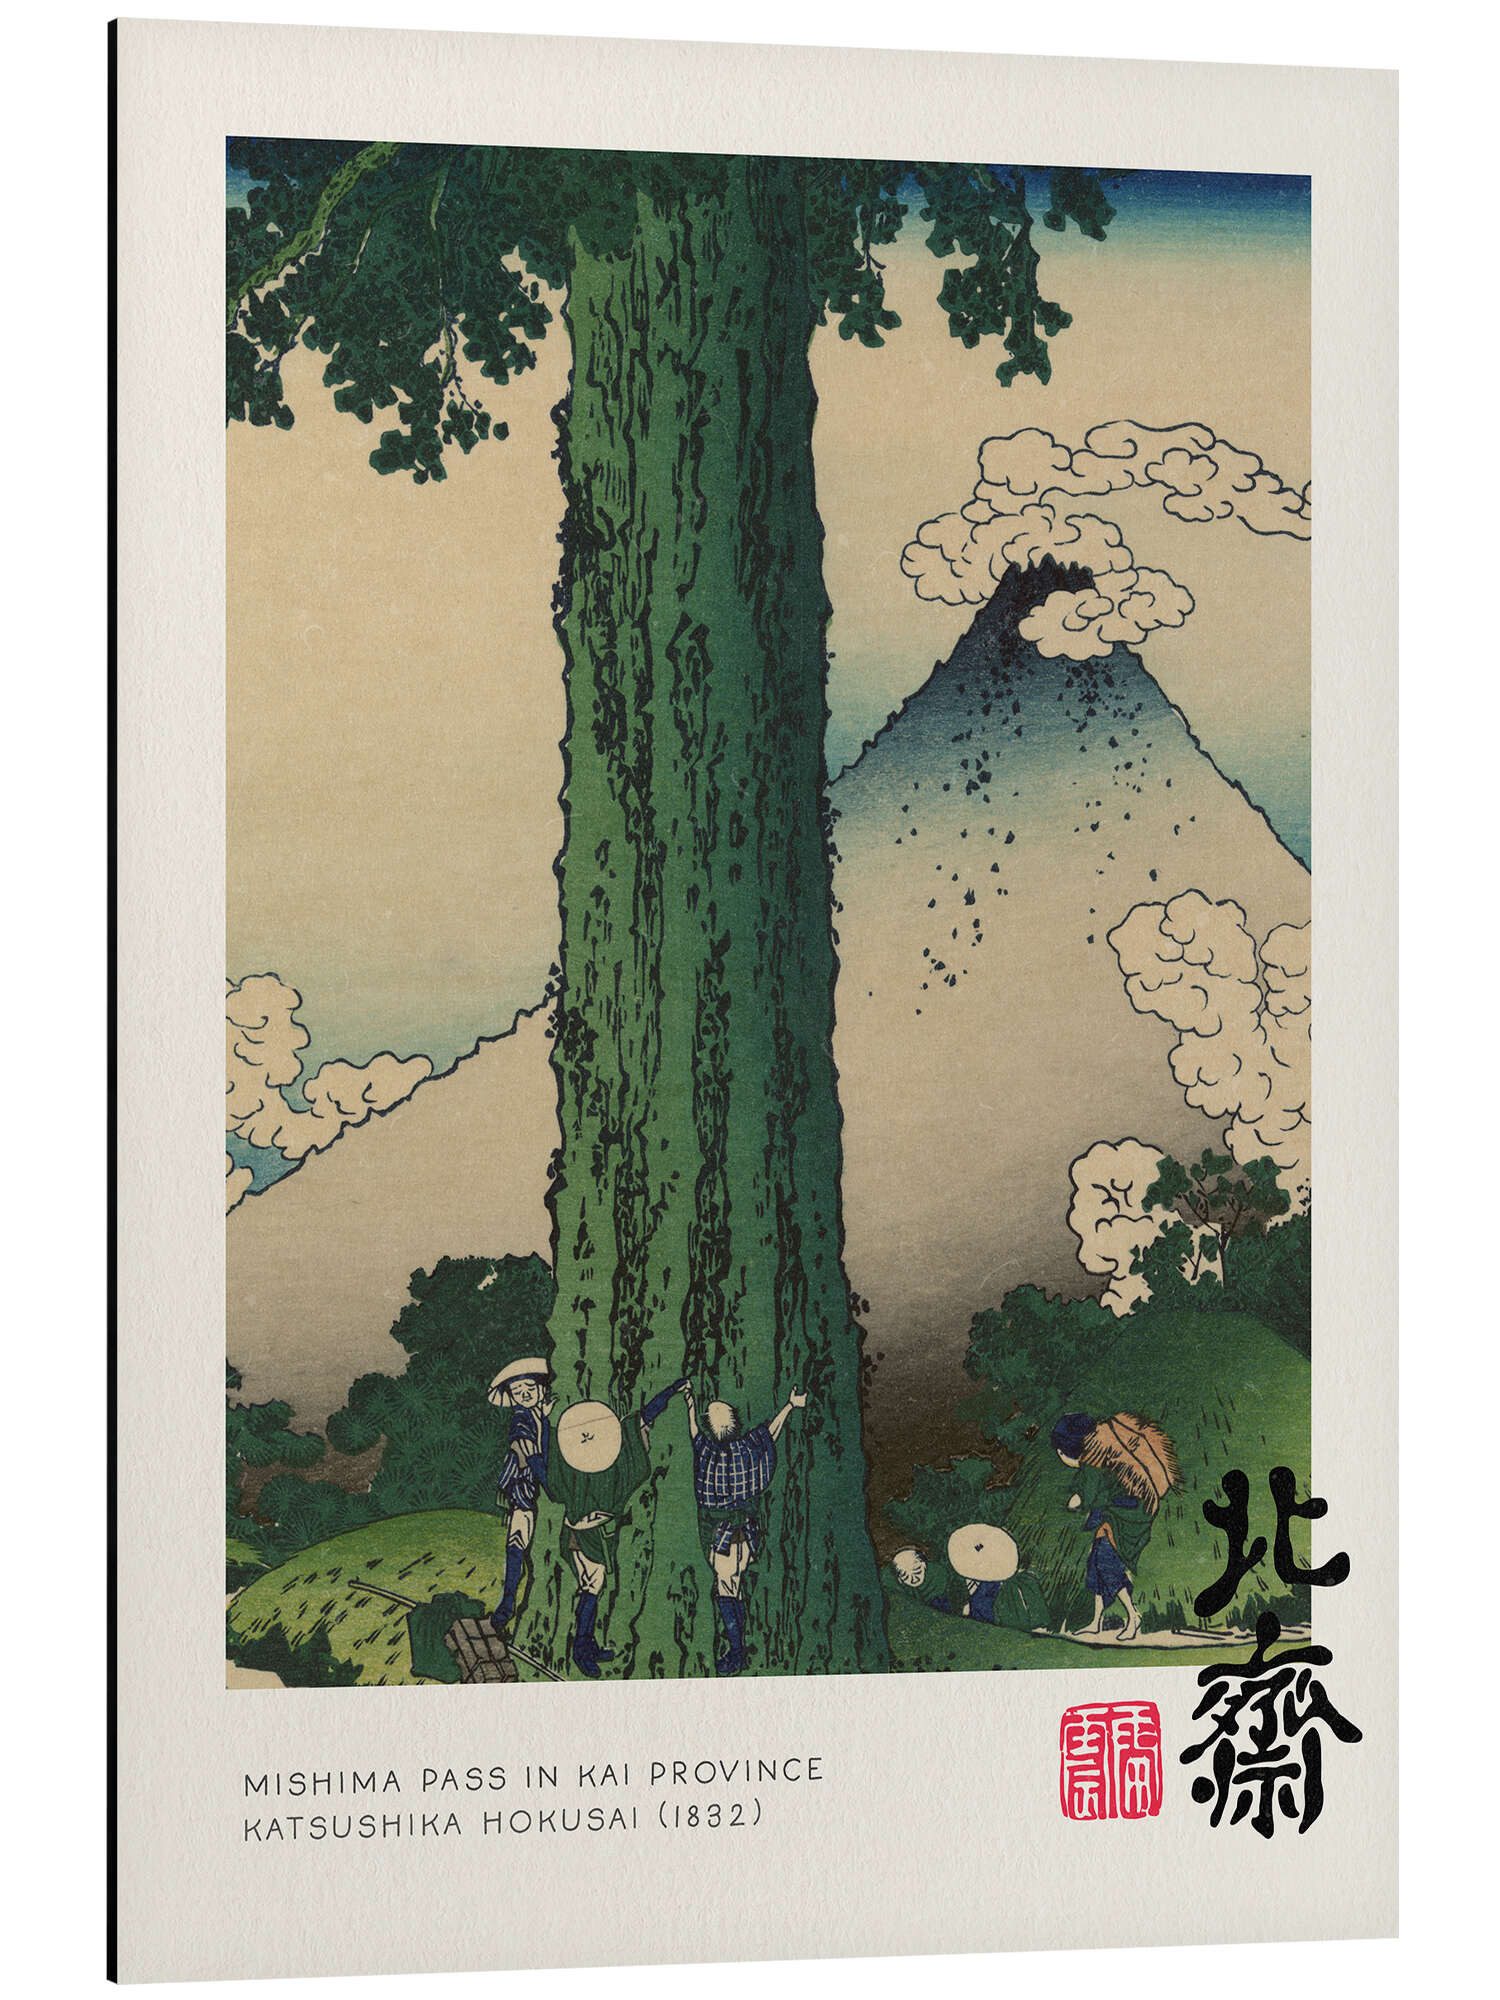 Posterlounge Alu-Dibond-Druck Katsushika Hokusai, Mishima Pass in Kai Province, Wohnzimmer Malerei